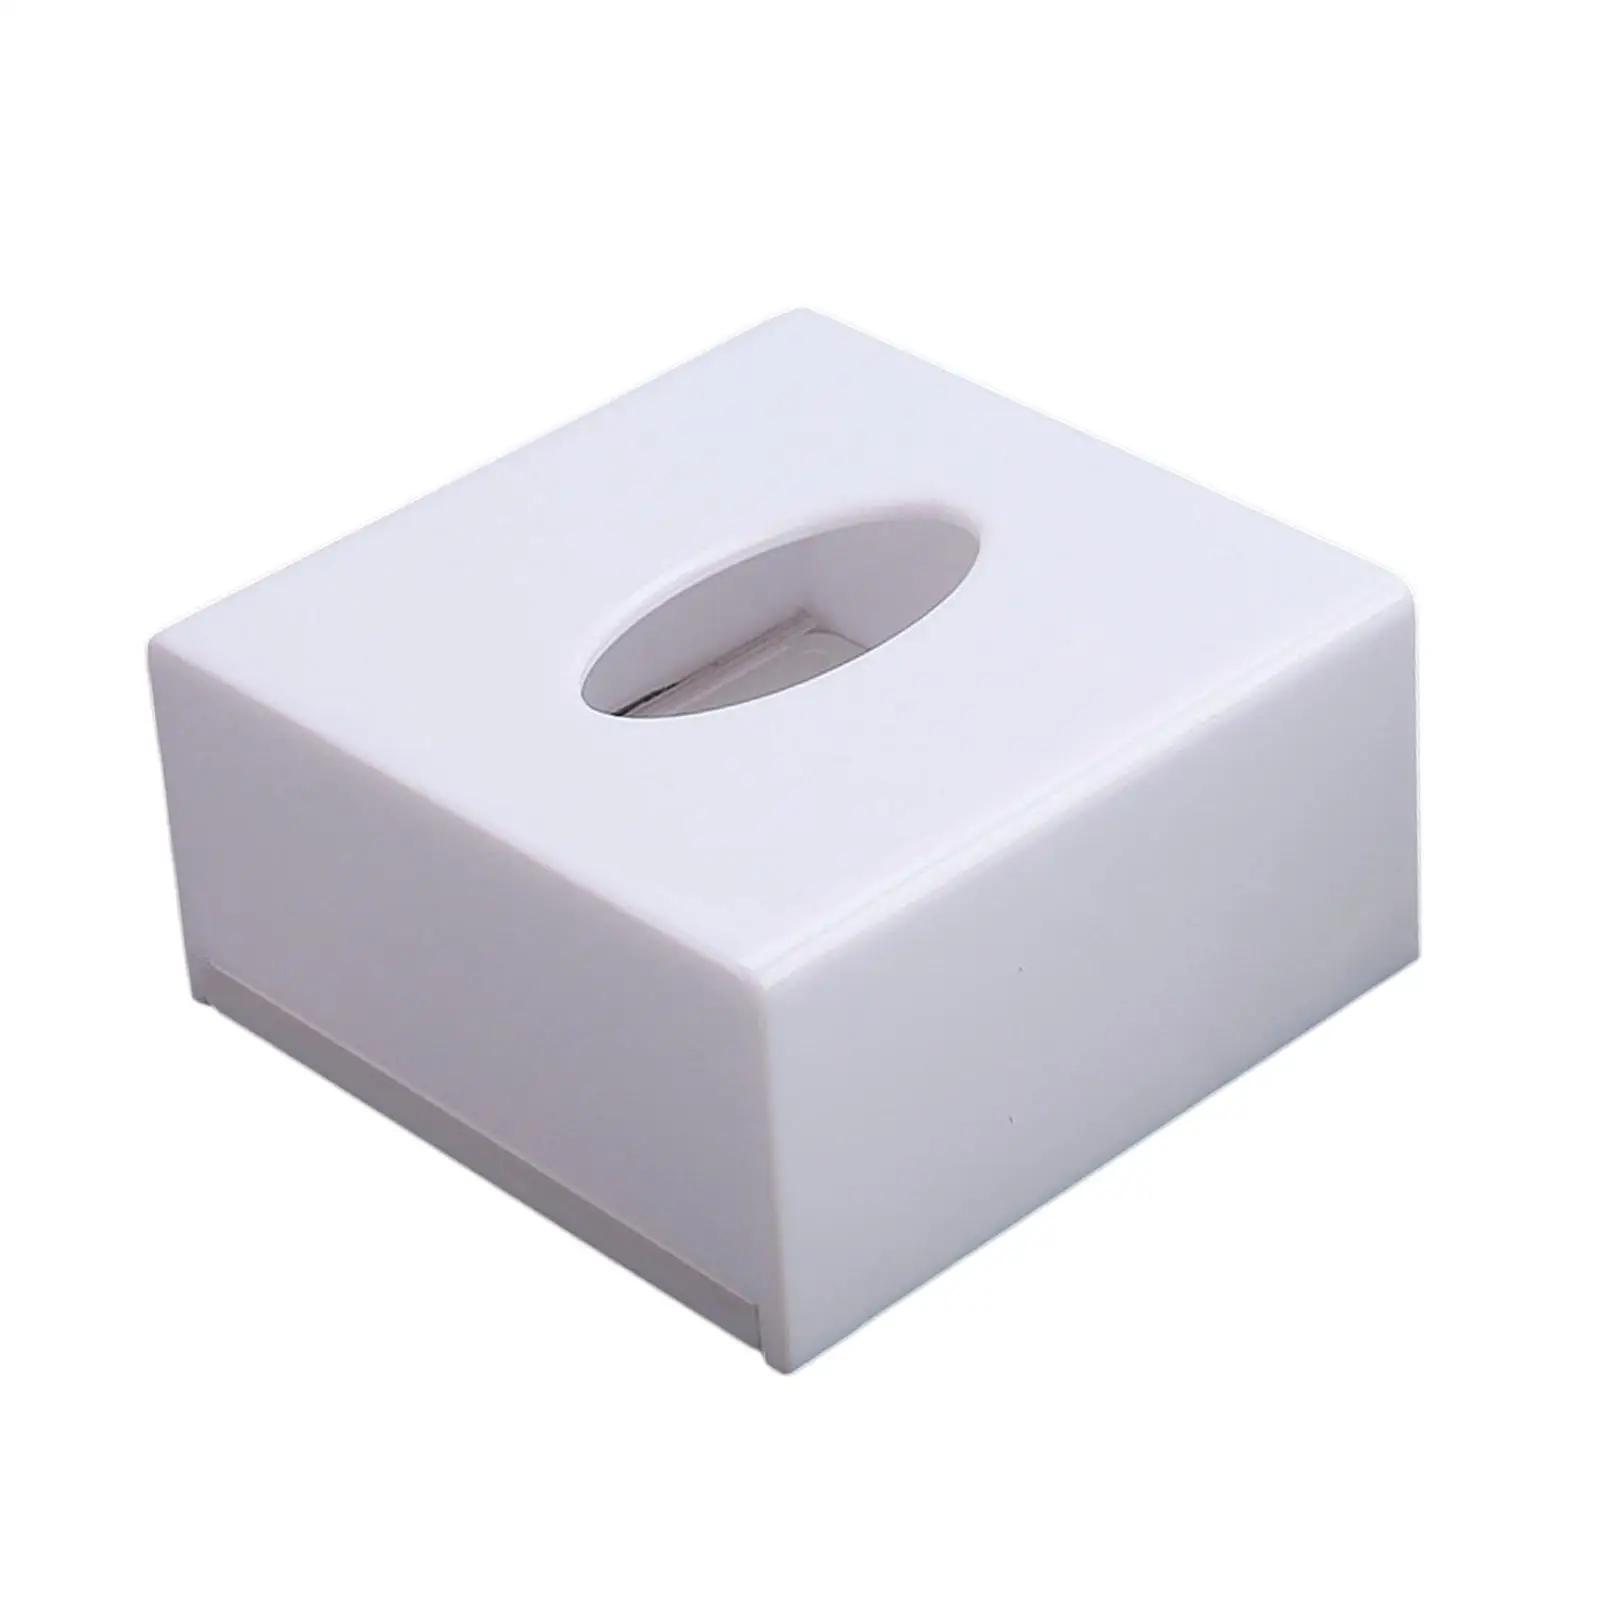 Facial Tissue Case Acrylic Toilet Paper Rack Tissue Paper Holder Container Tissue Box for Office Hotel Desktop Washroom Bedroom